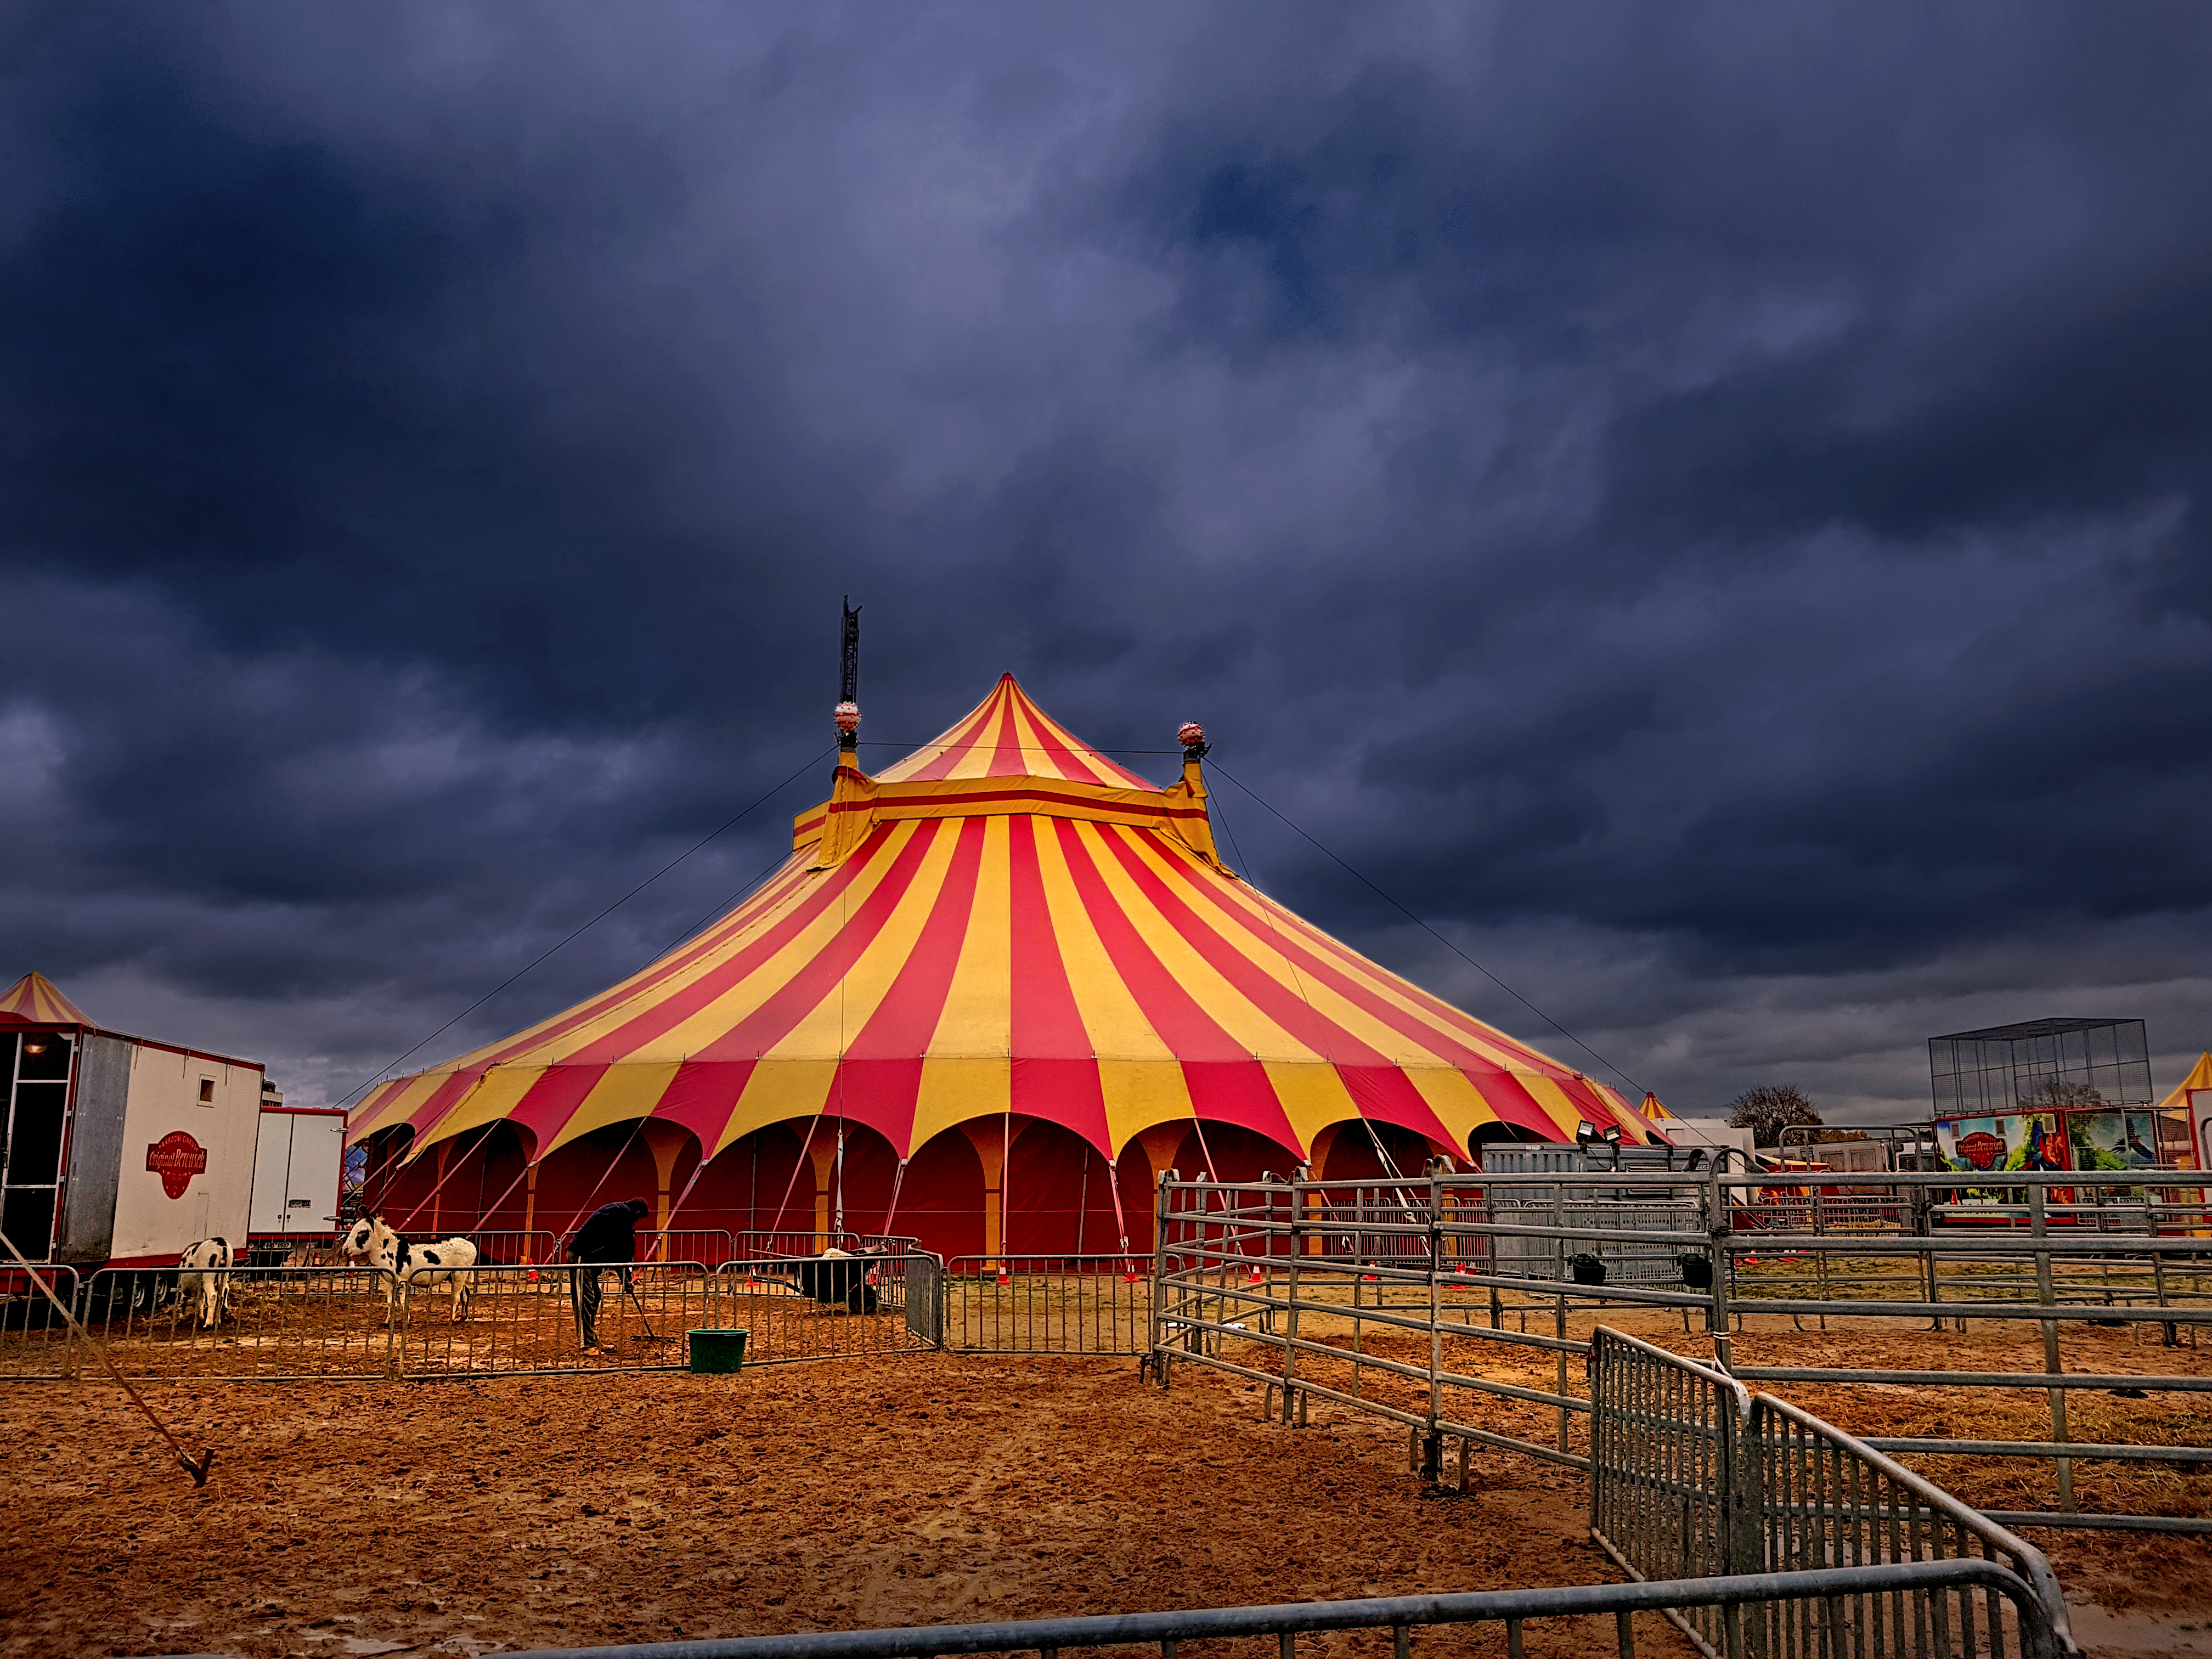 circus-tent-big-top-vaudeville-theater-corral-1604110-pxhere.com.jpg